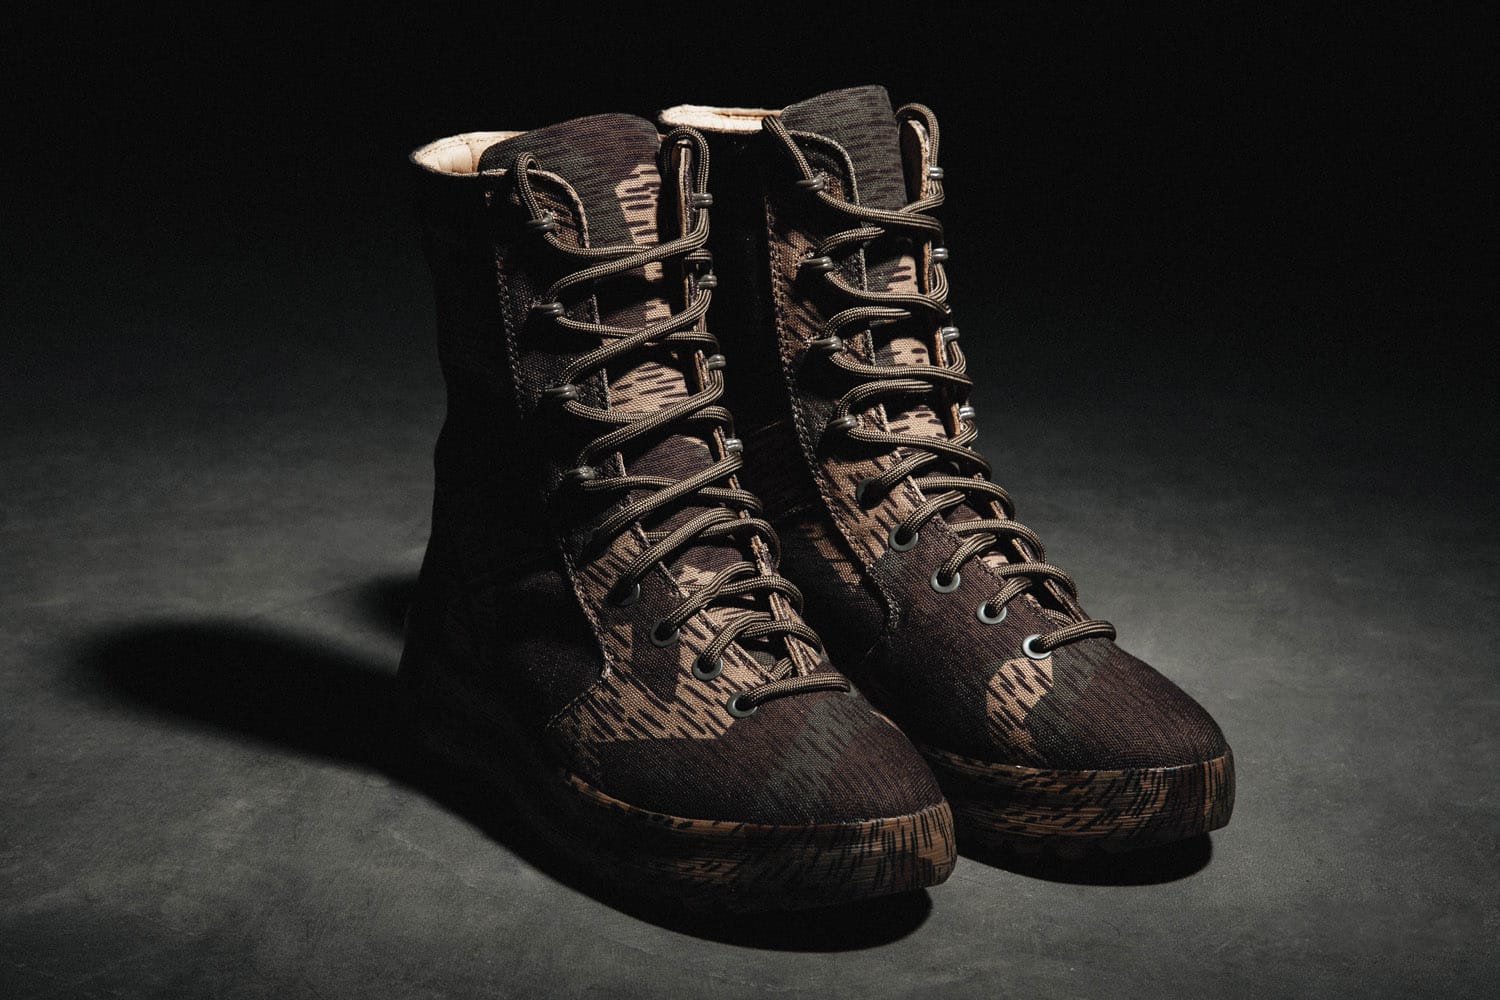 yeezy season 6 combat boots